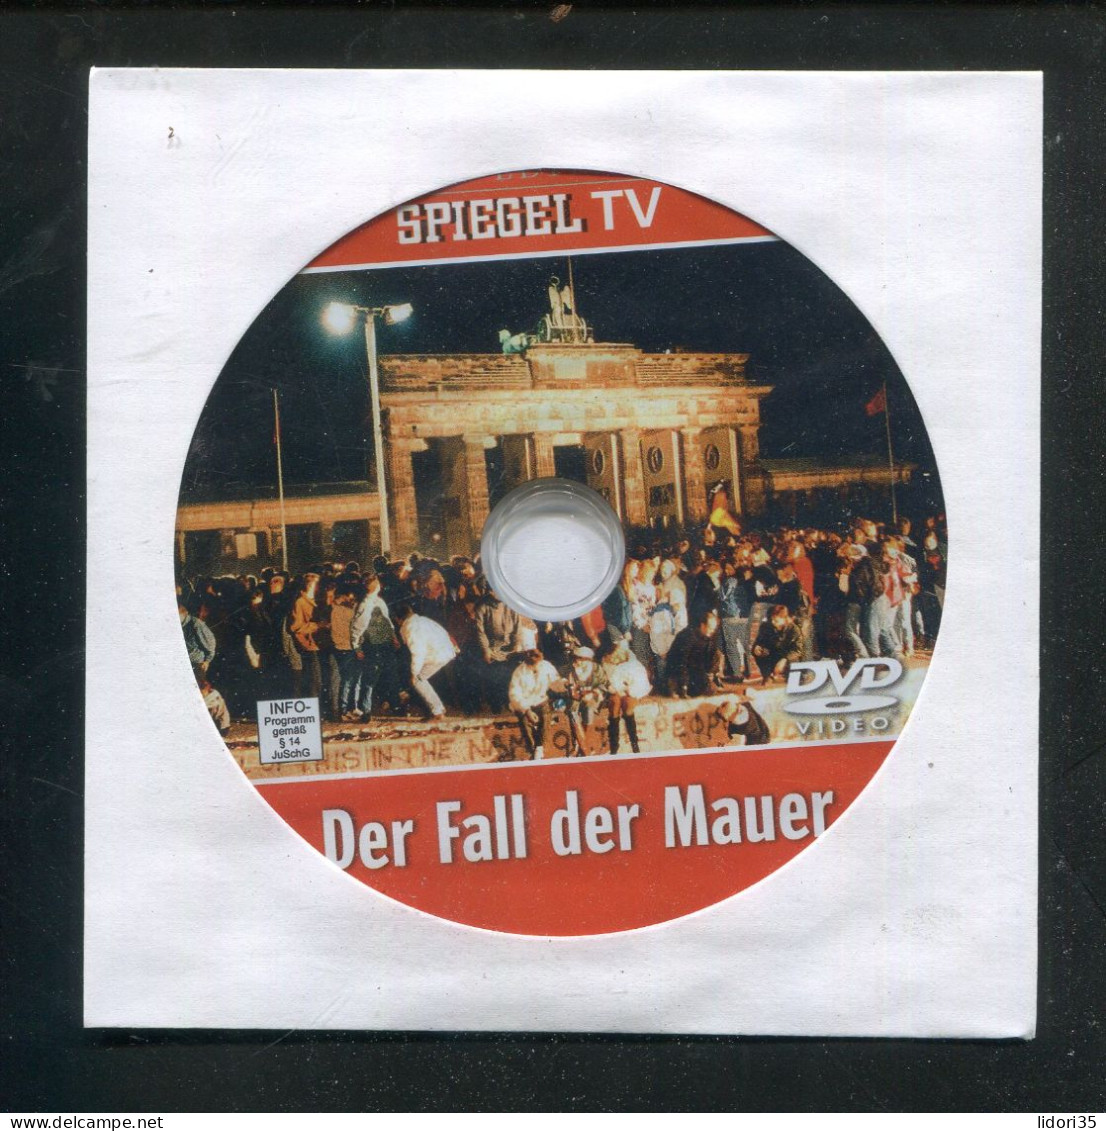 "DER FALL DER MAUER" DVD (Spiegel-TV) (L1194) - Documentary